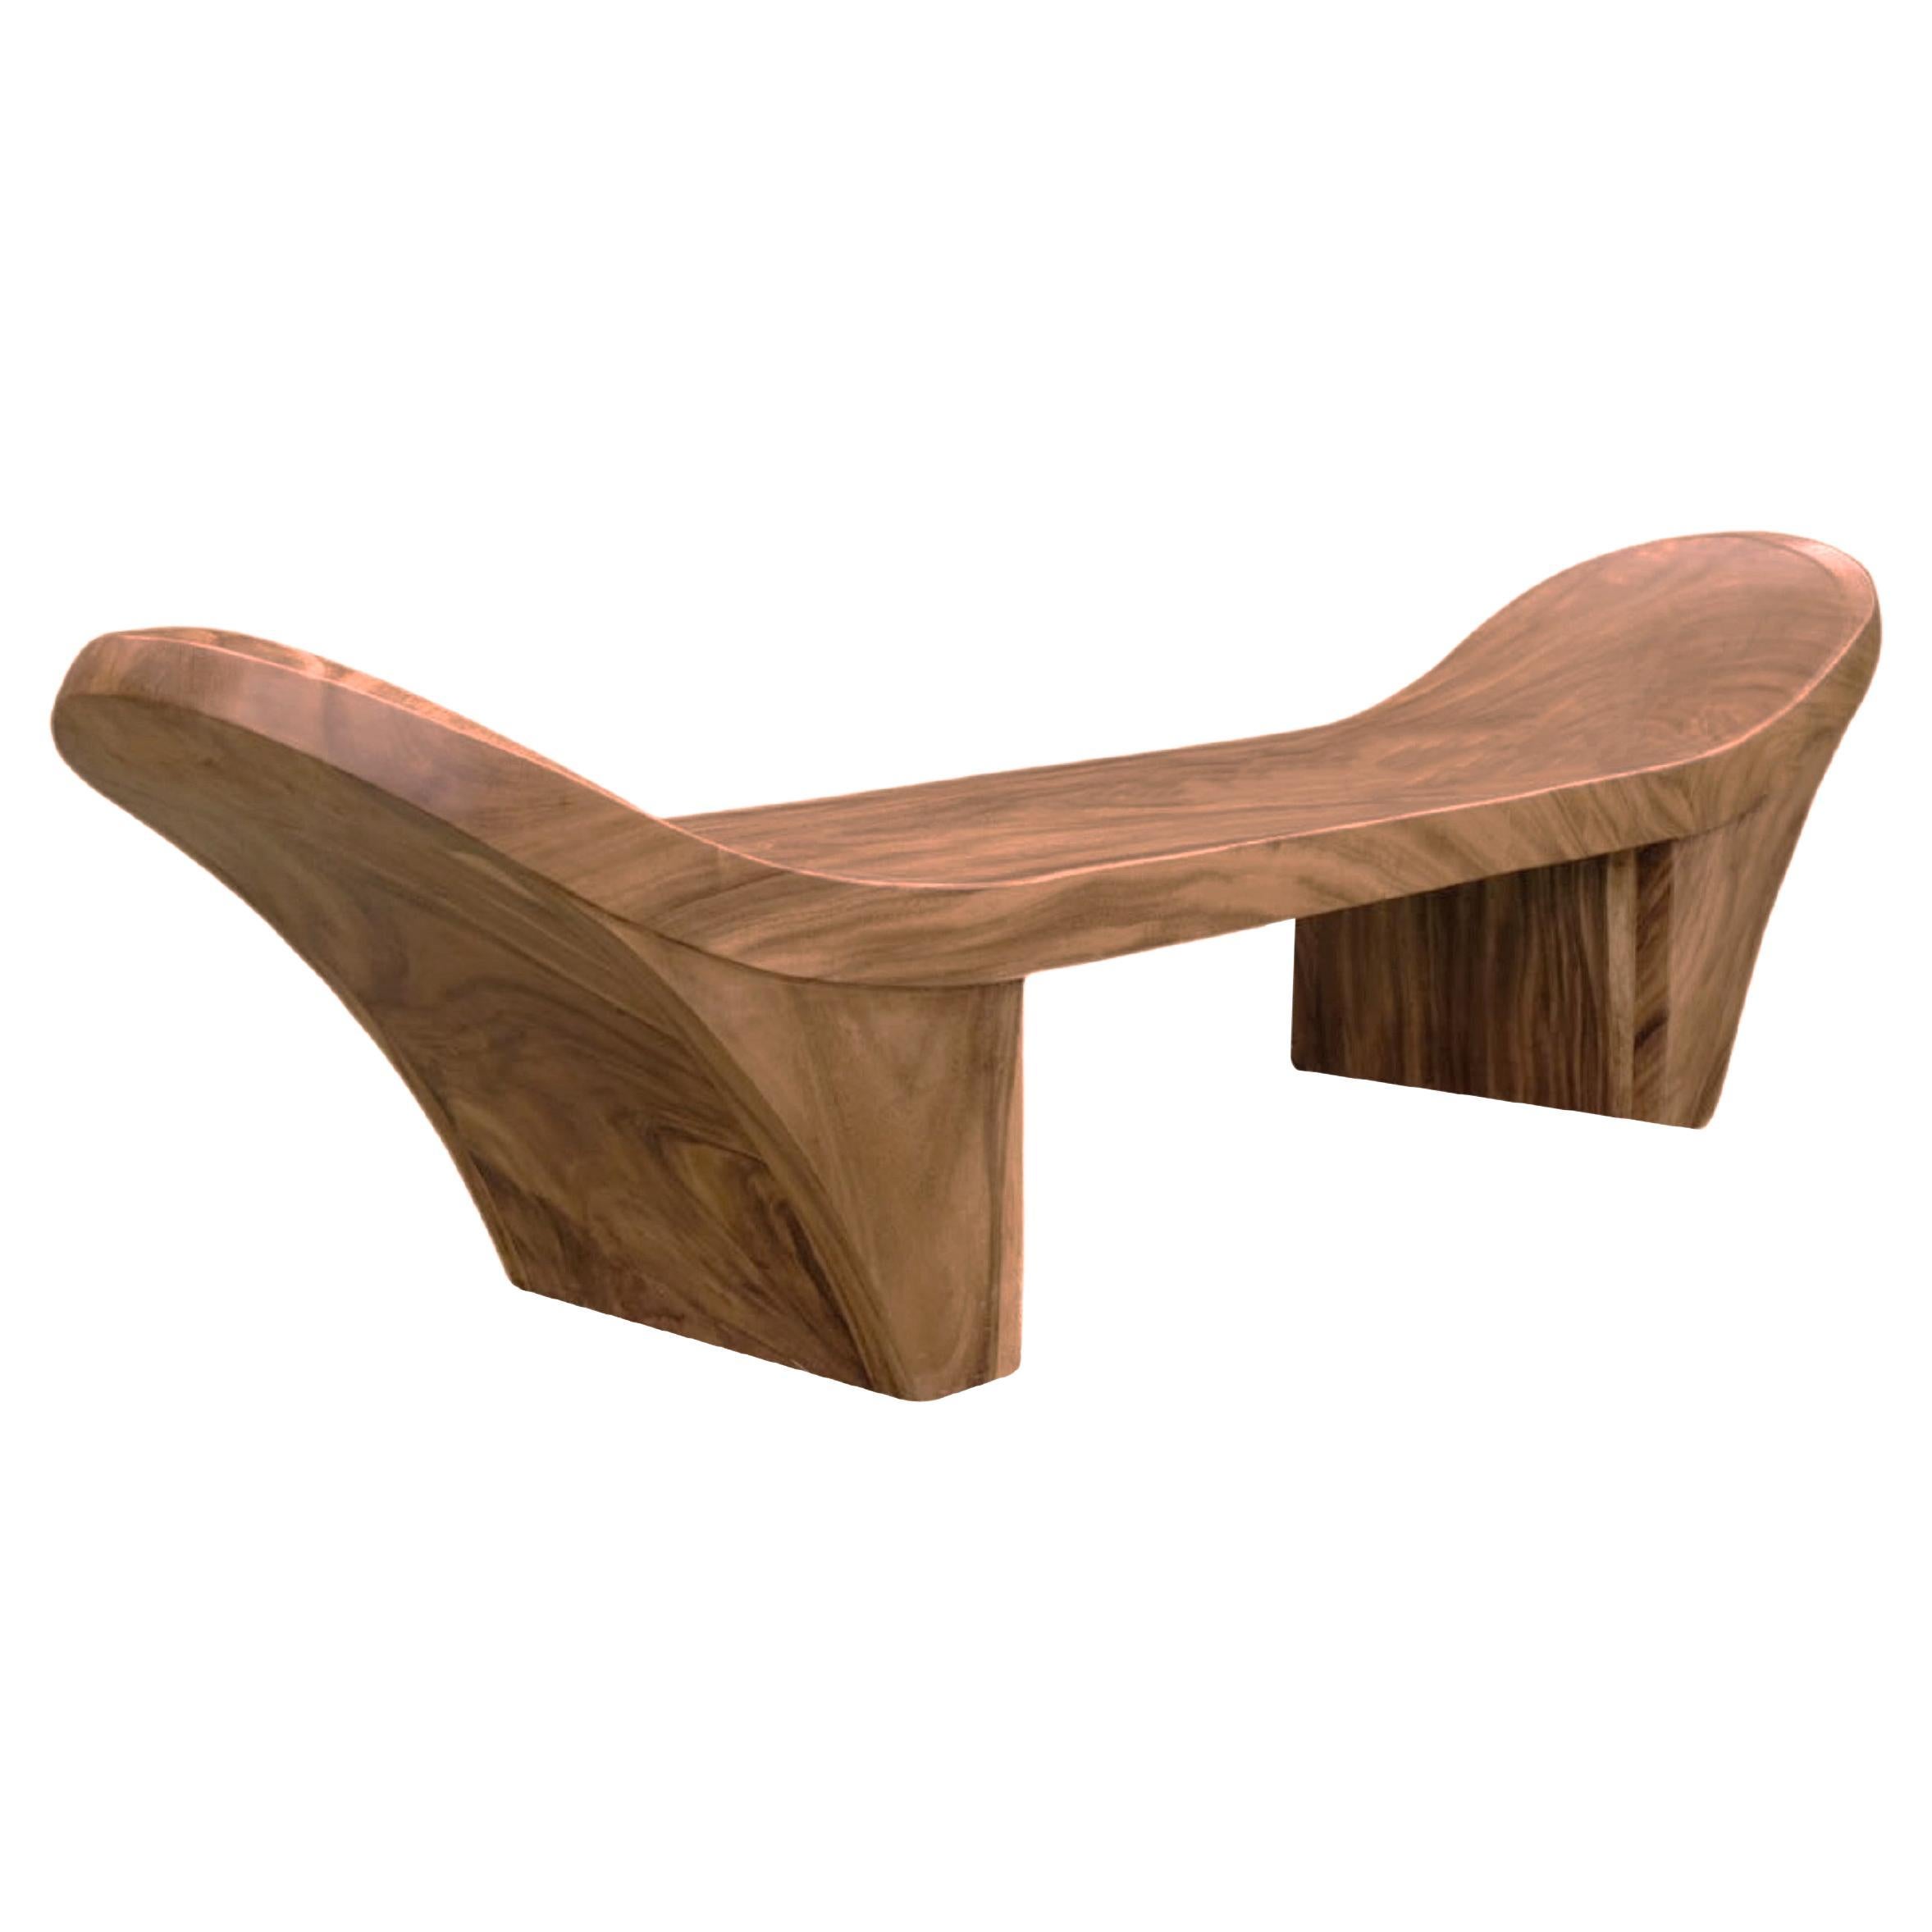 Suar Wood Sculptural Bench Modern Organic